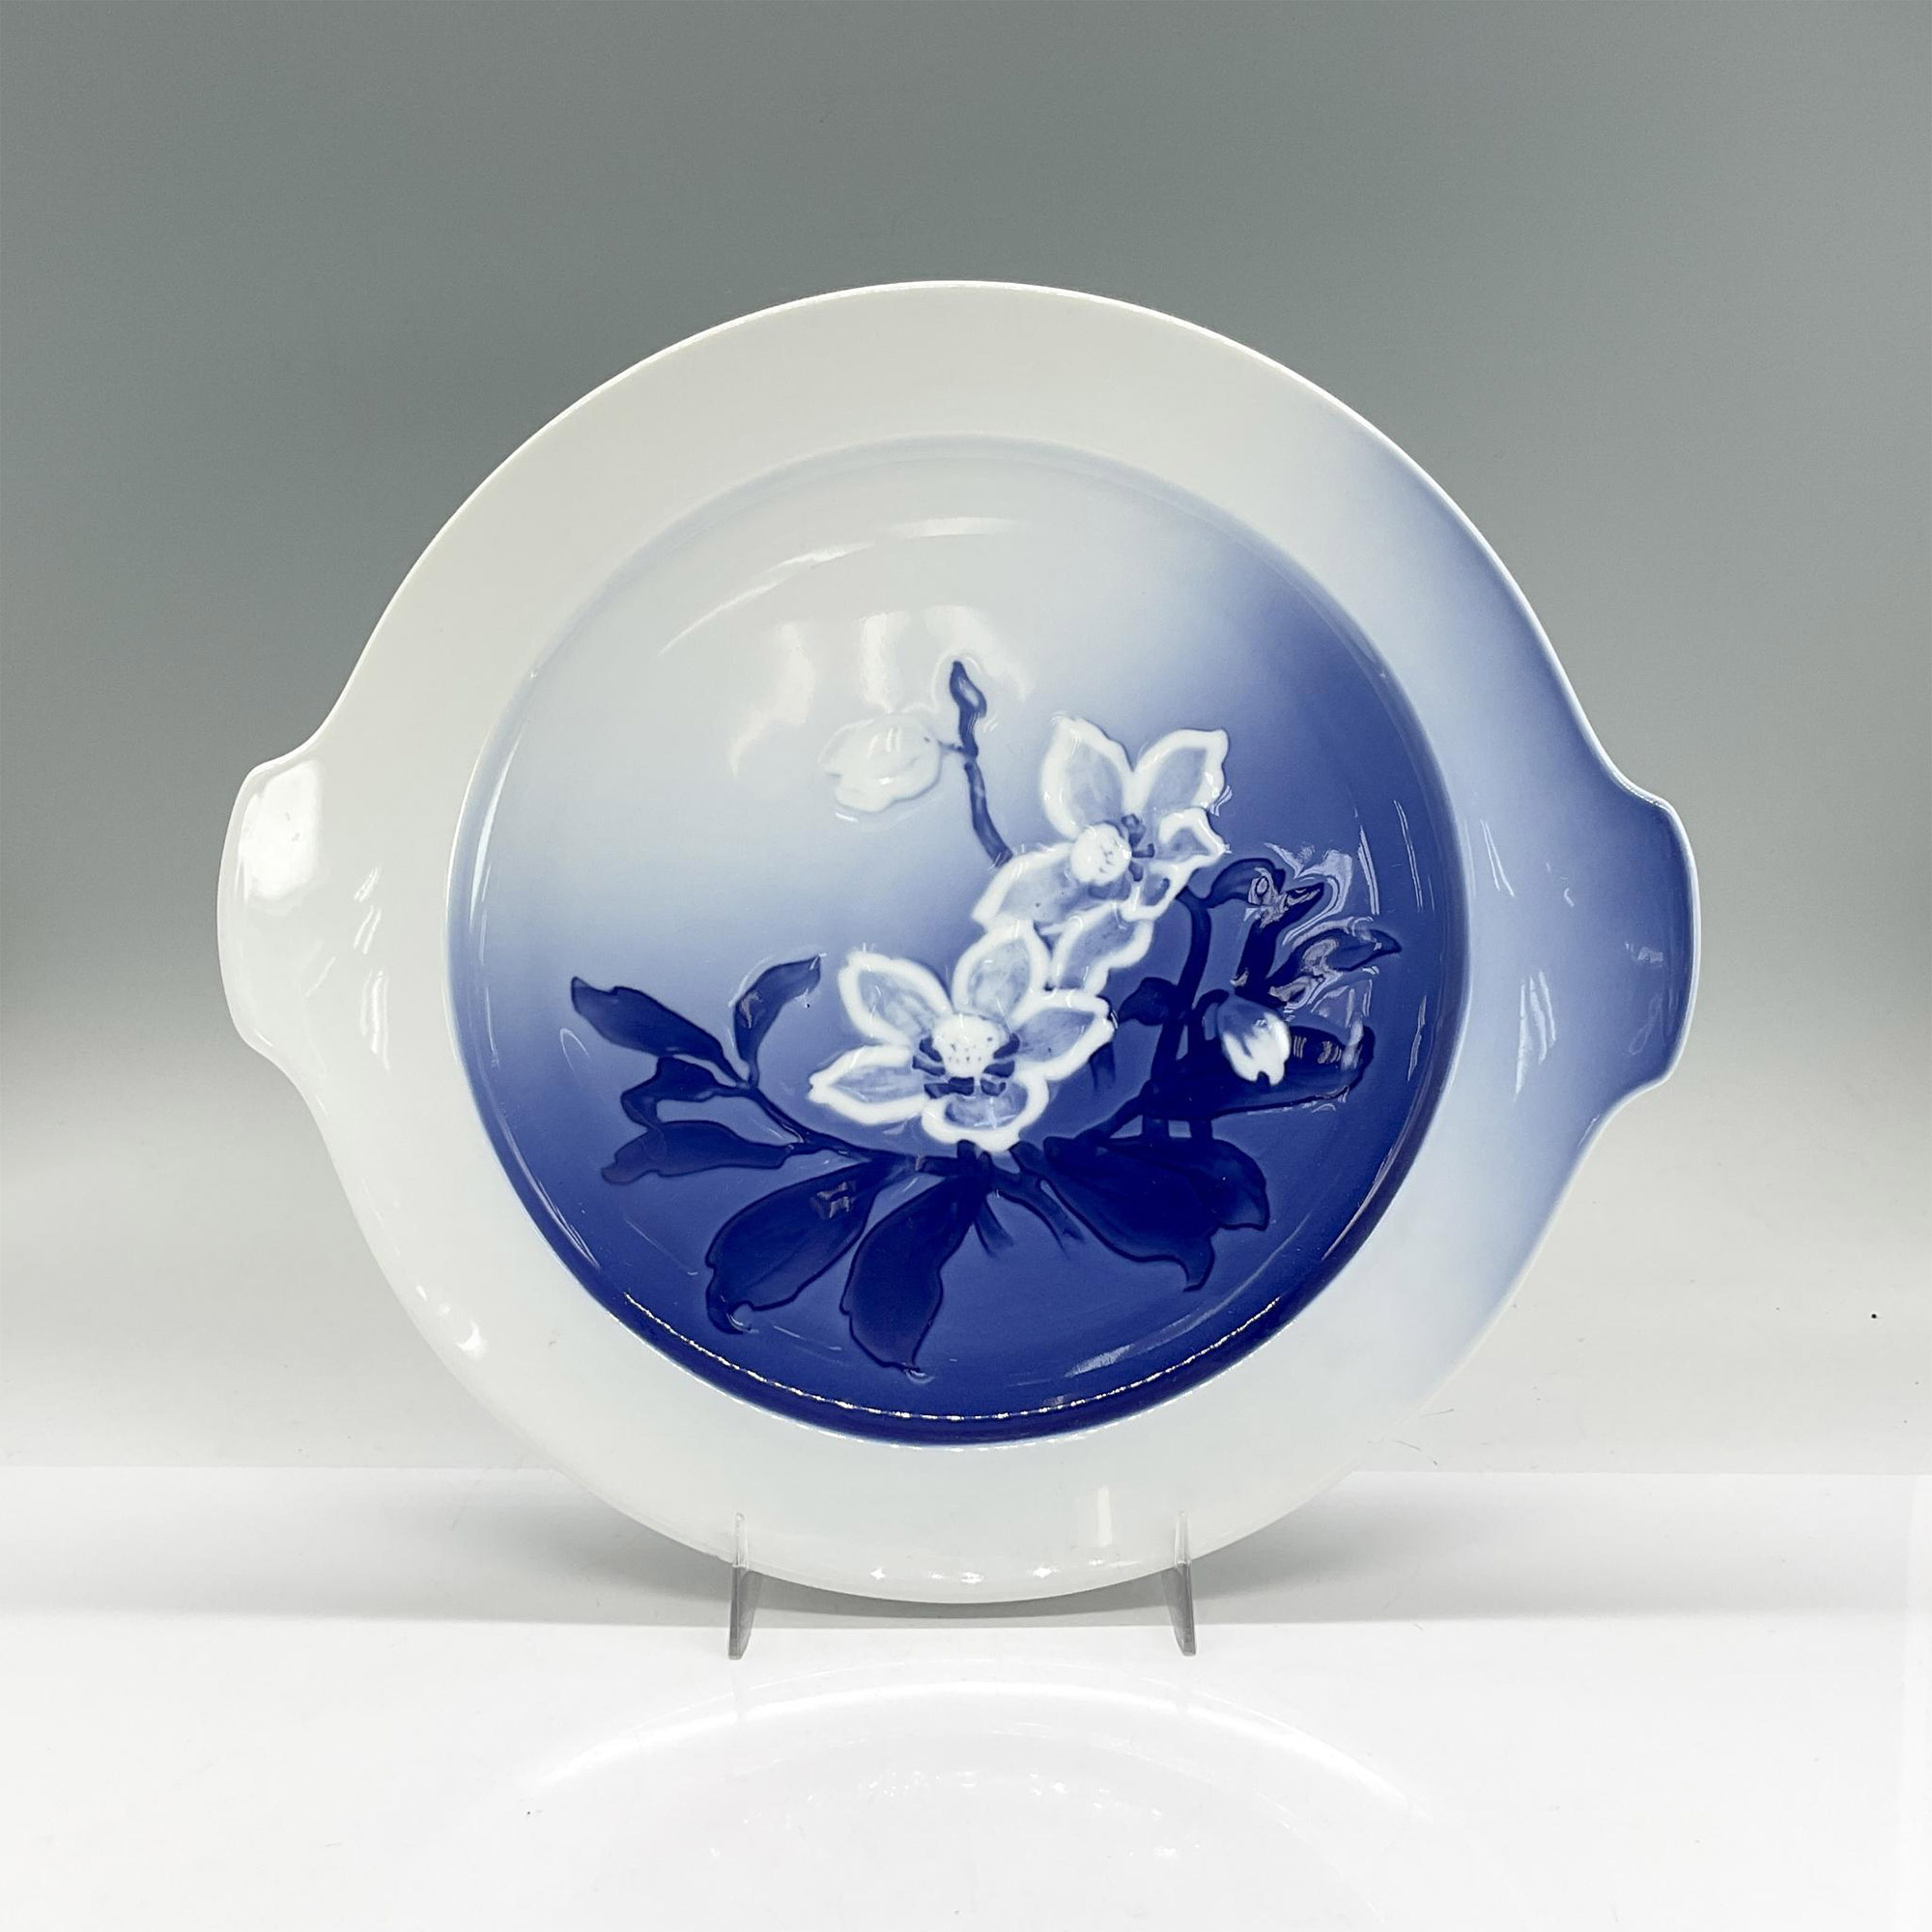 4pc Bing & Grondahl Porcelain Dishes, Christmas Rose - Image 2 of 7